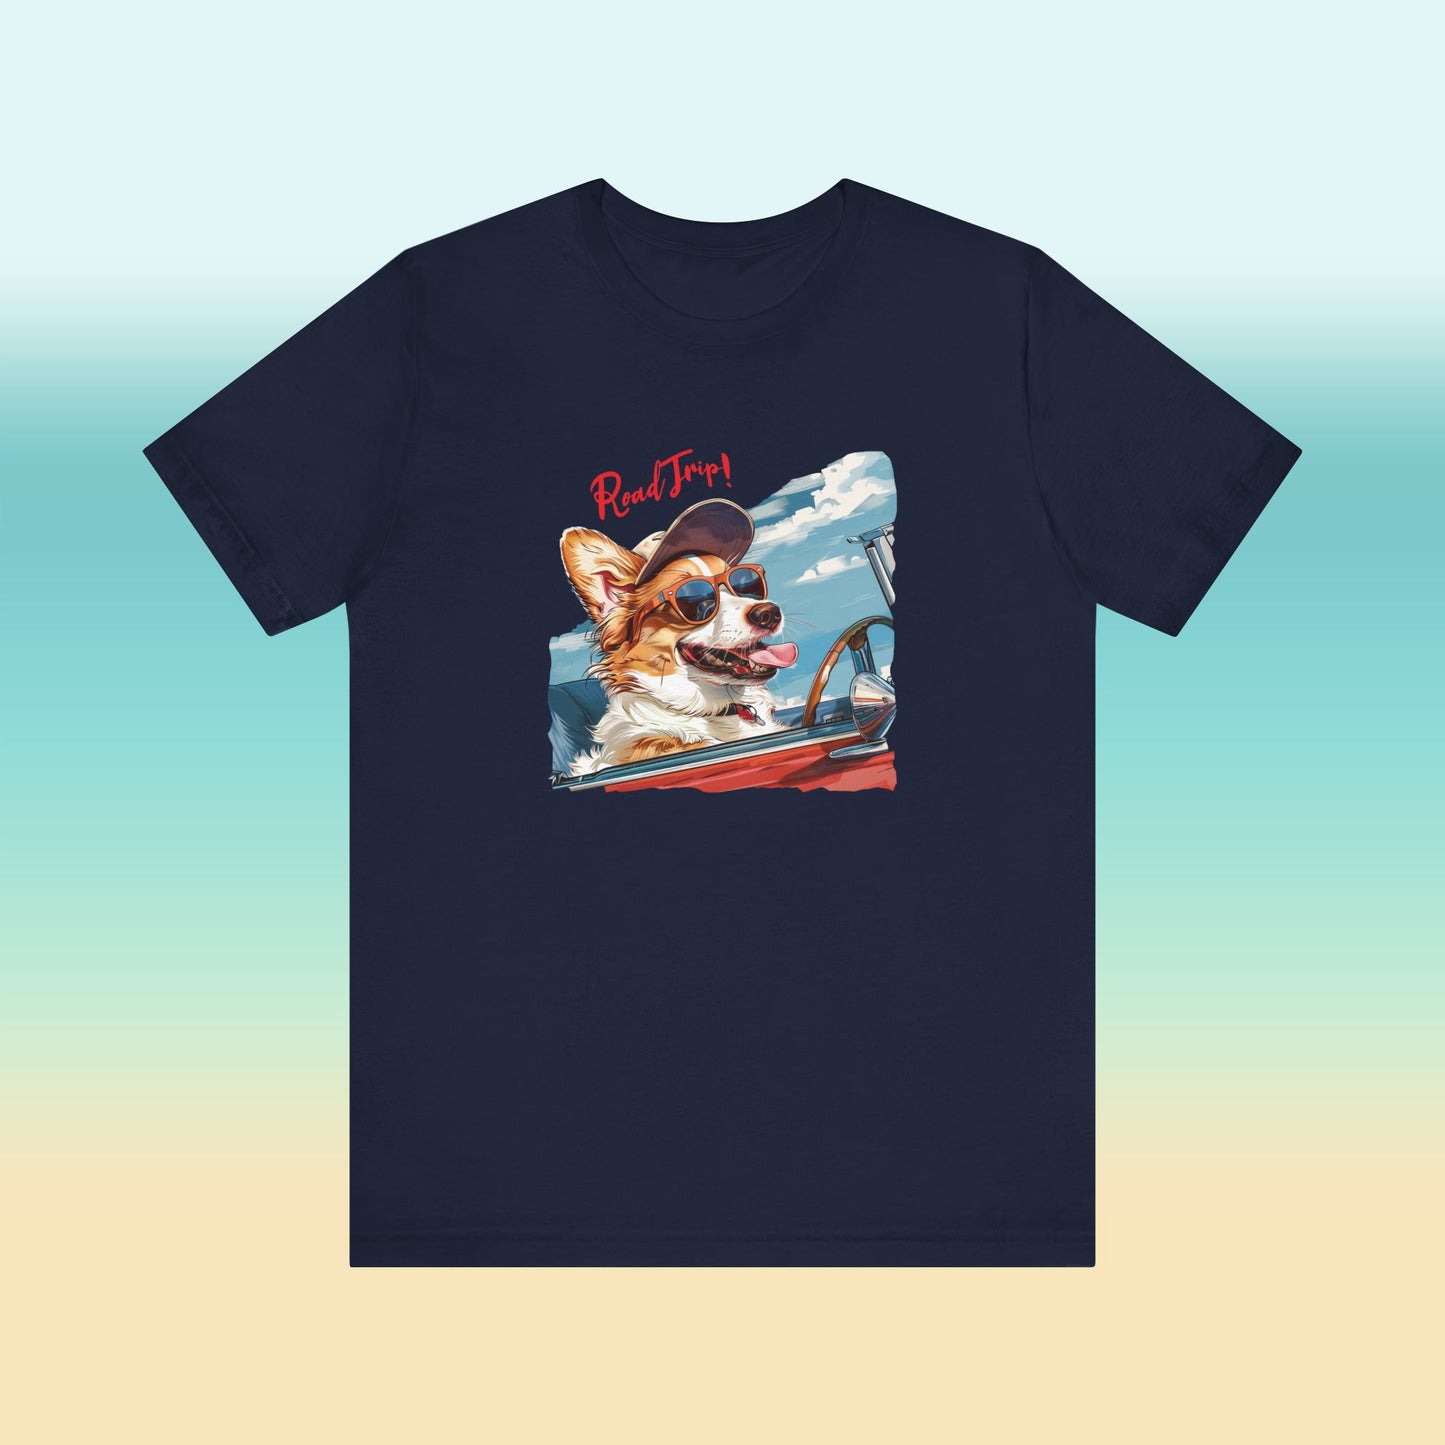 Cute Dog T-shirt, Road Trip Shirt, Original Corgi Dog Art Mom Dad Shirt, Cool Dog Shirts - FlooredByArt